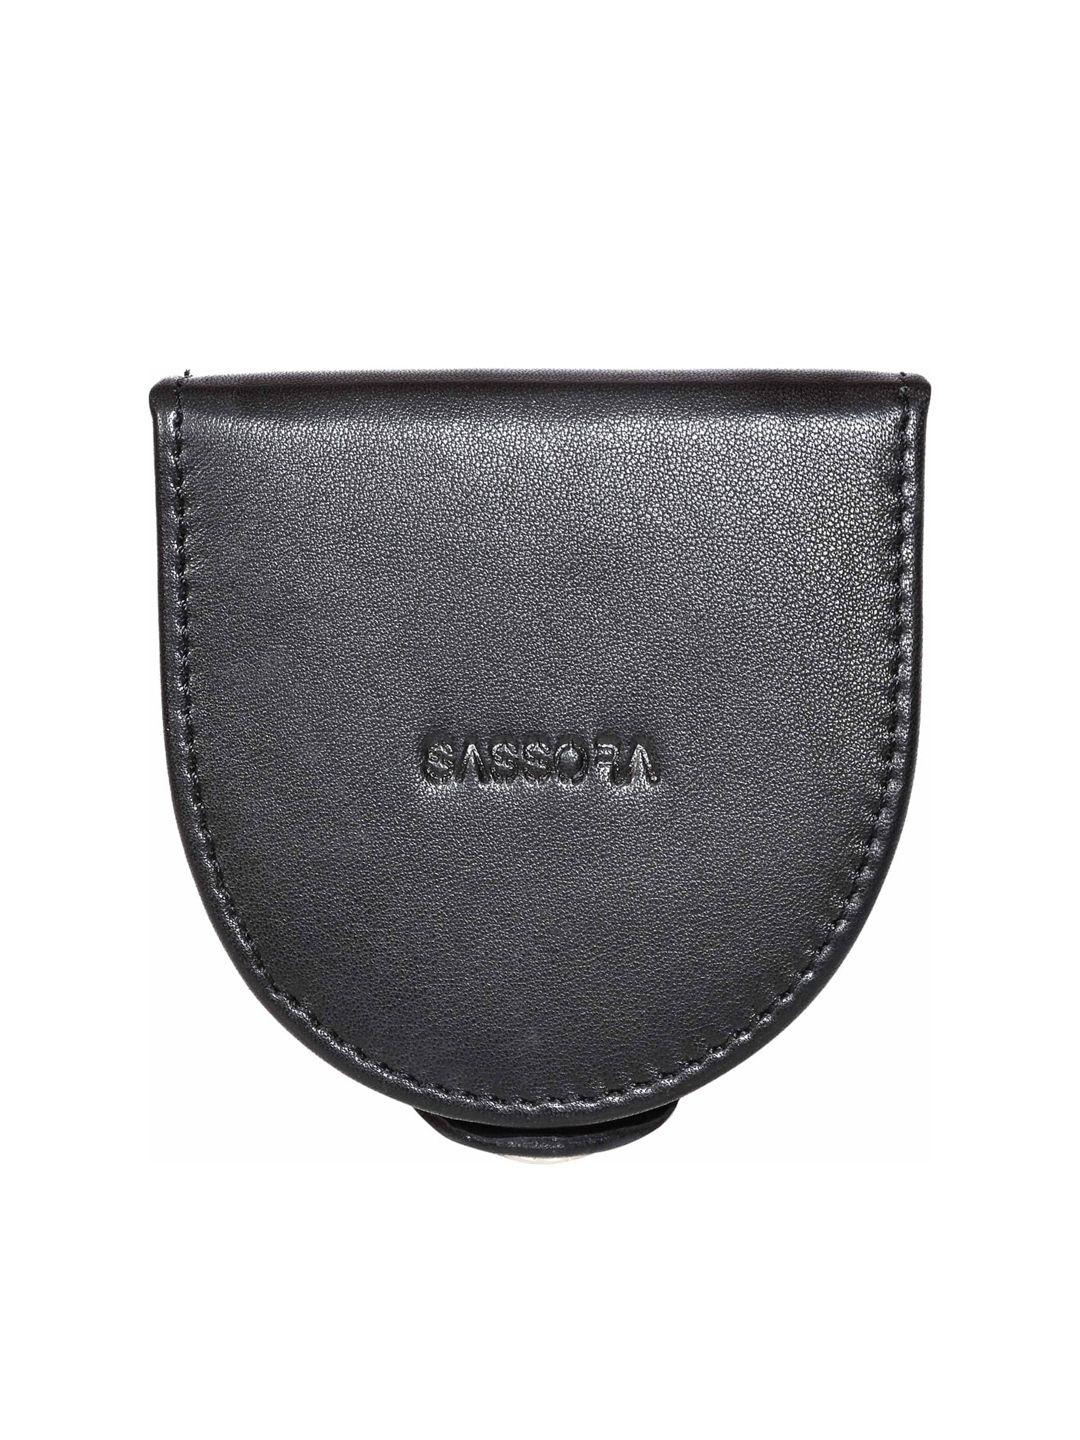 sassora genuine leather coin pouch